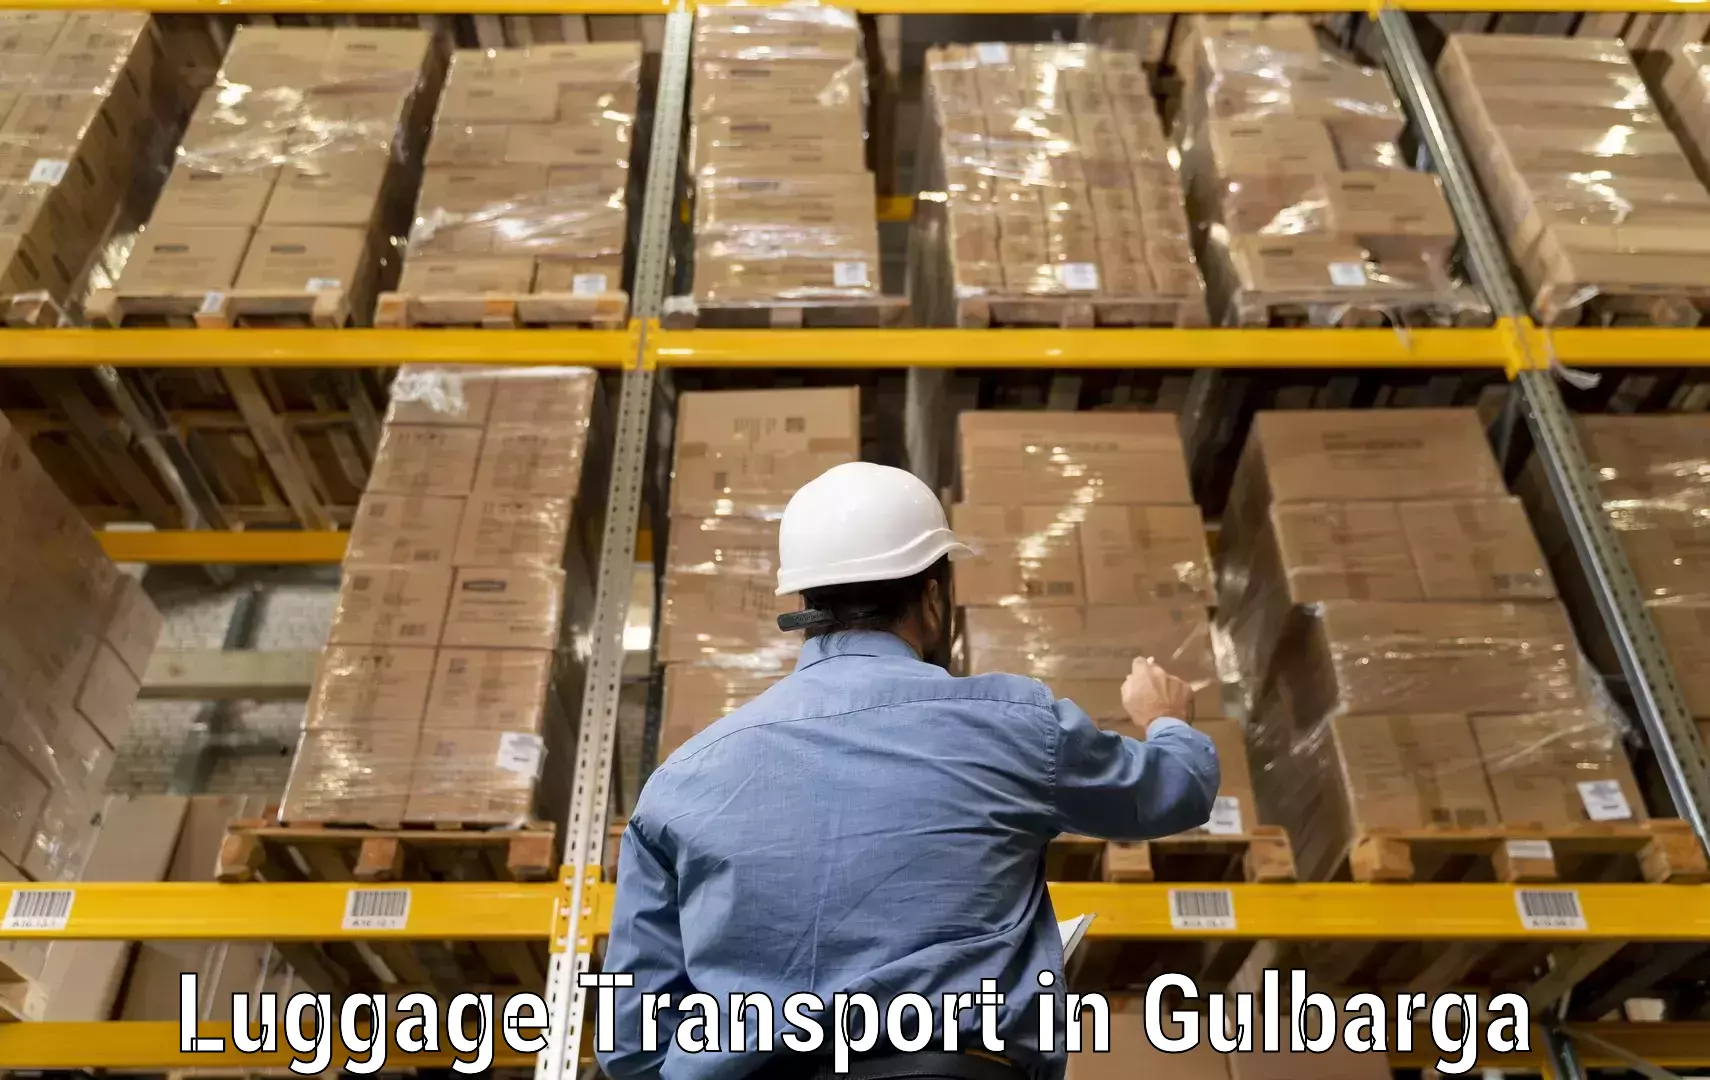 Luggage shipment tracking in Gulbarga